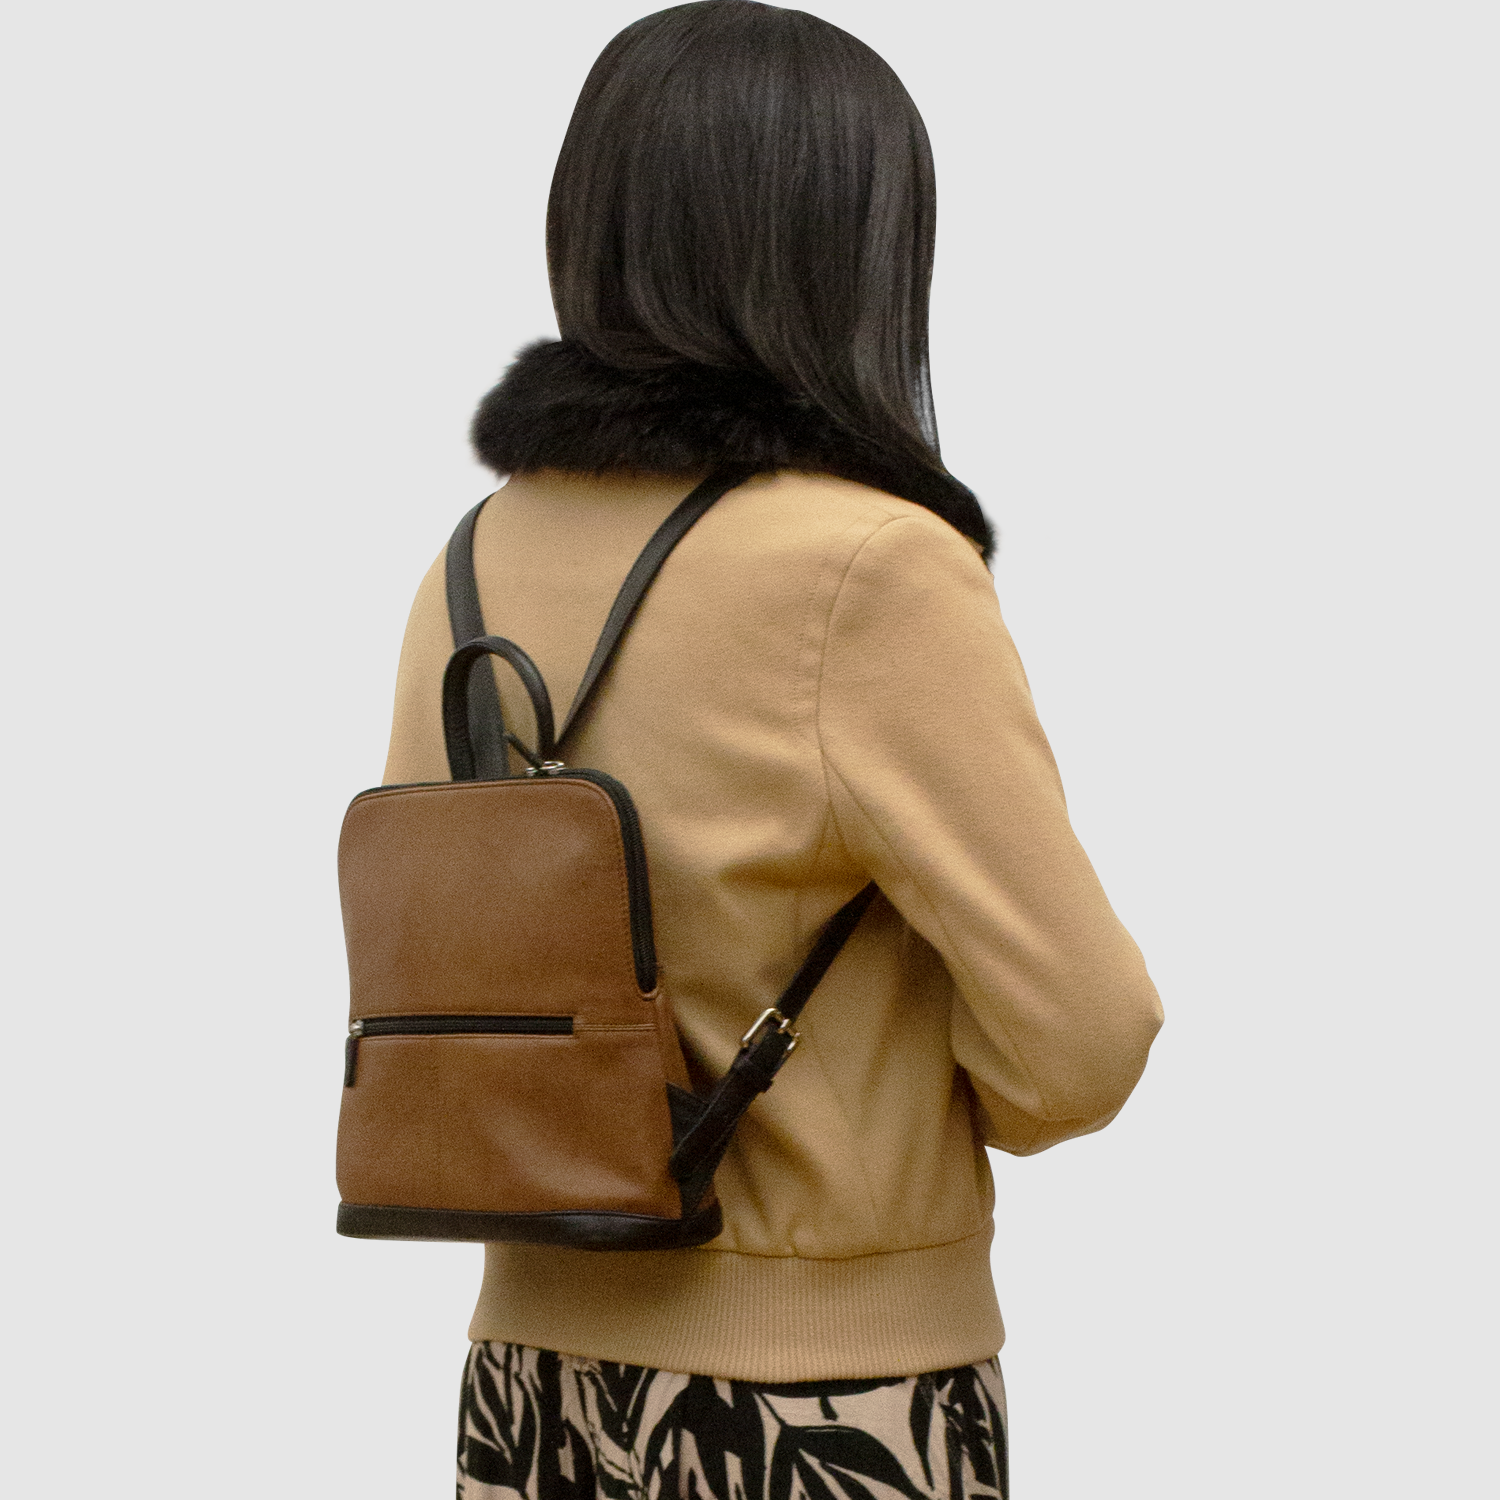 Fioretta Italian Genuine Leather Top Handle Backpack Handbag For Women -  Tan Brown